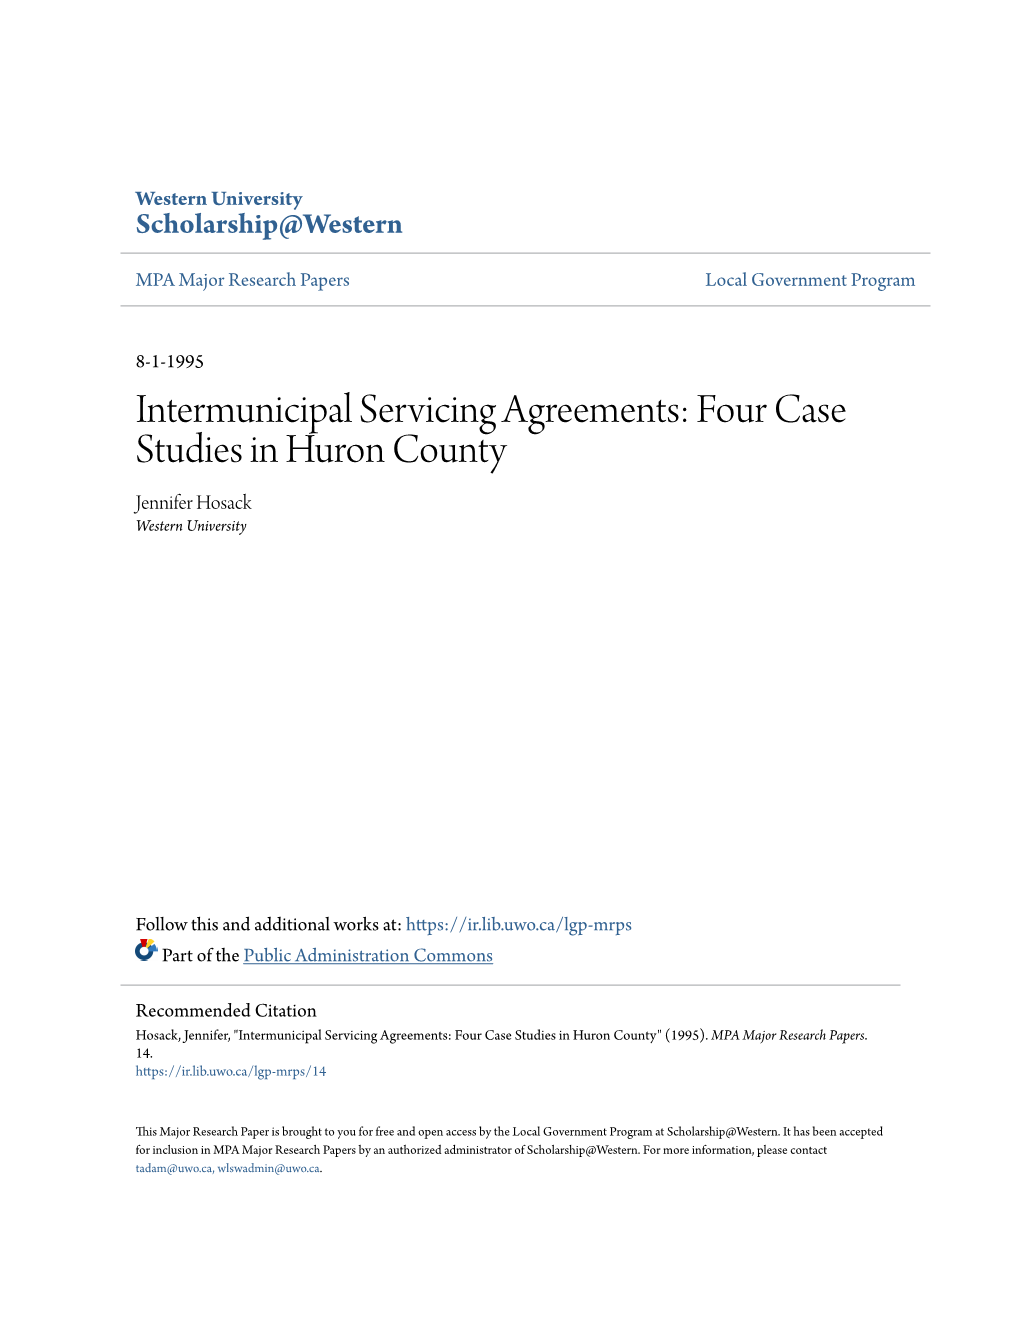 Four Case Studies in Huron County Jennifer Hosack Western University